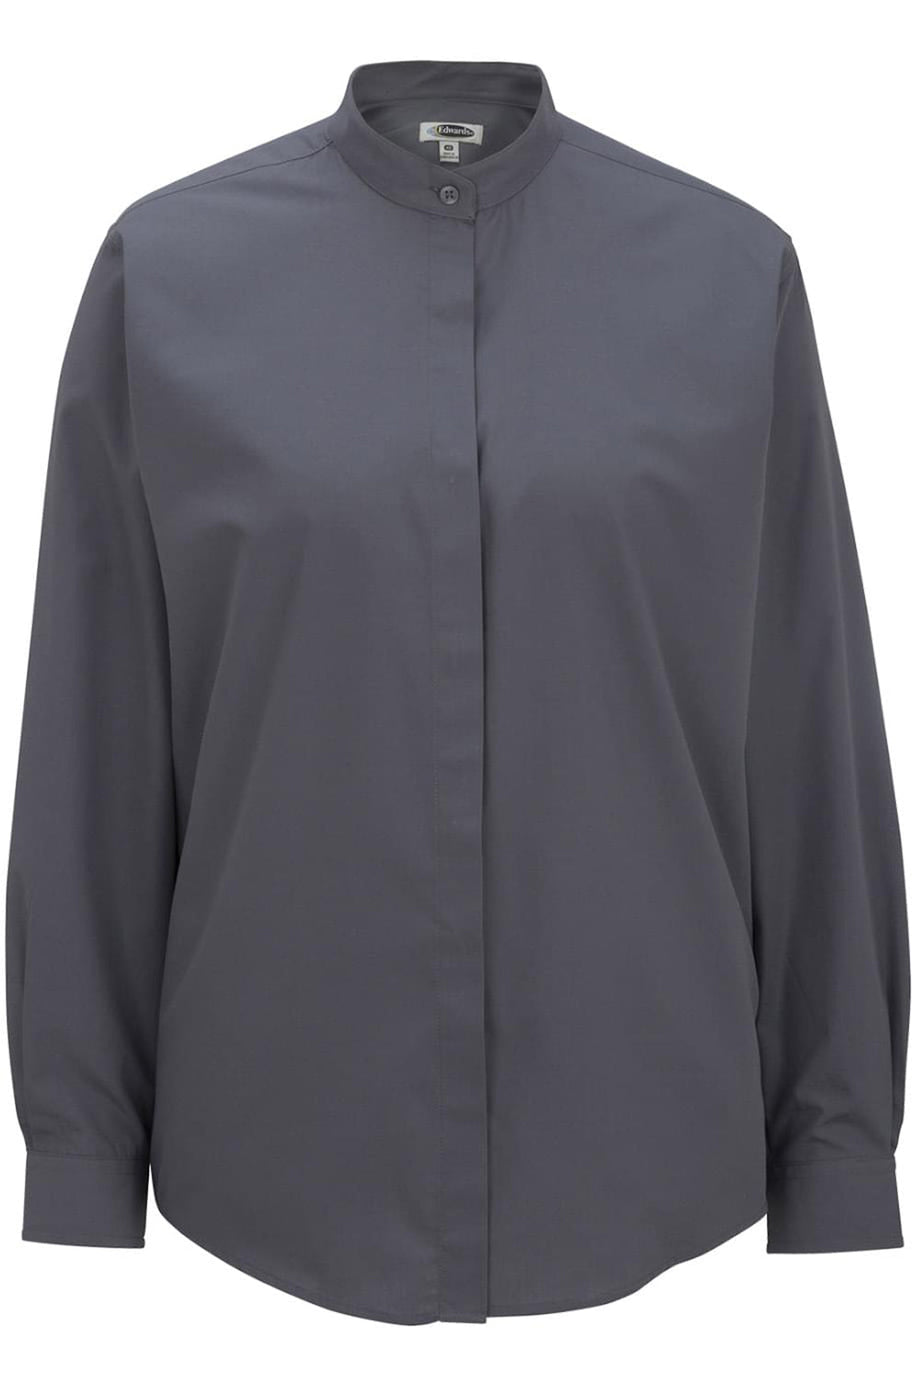 Edwards XXS Ladies' Banded Collar Broadcloth Shirt - Dark Grey